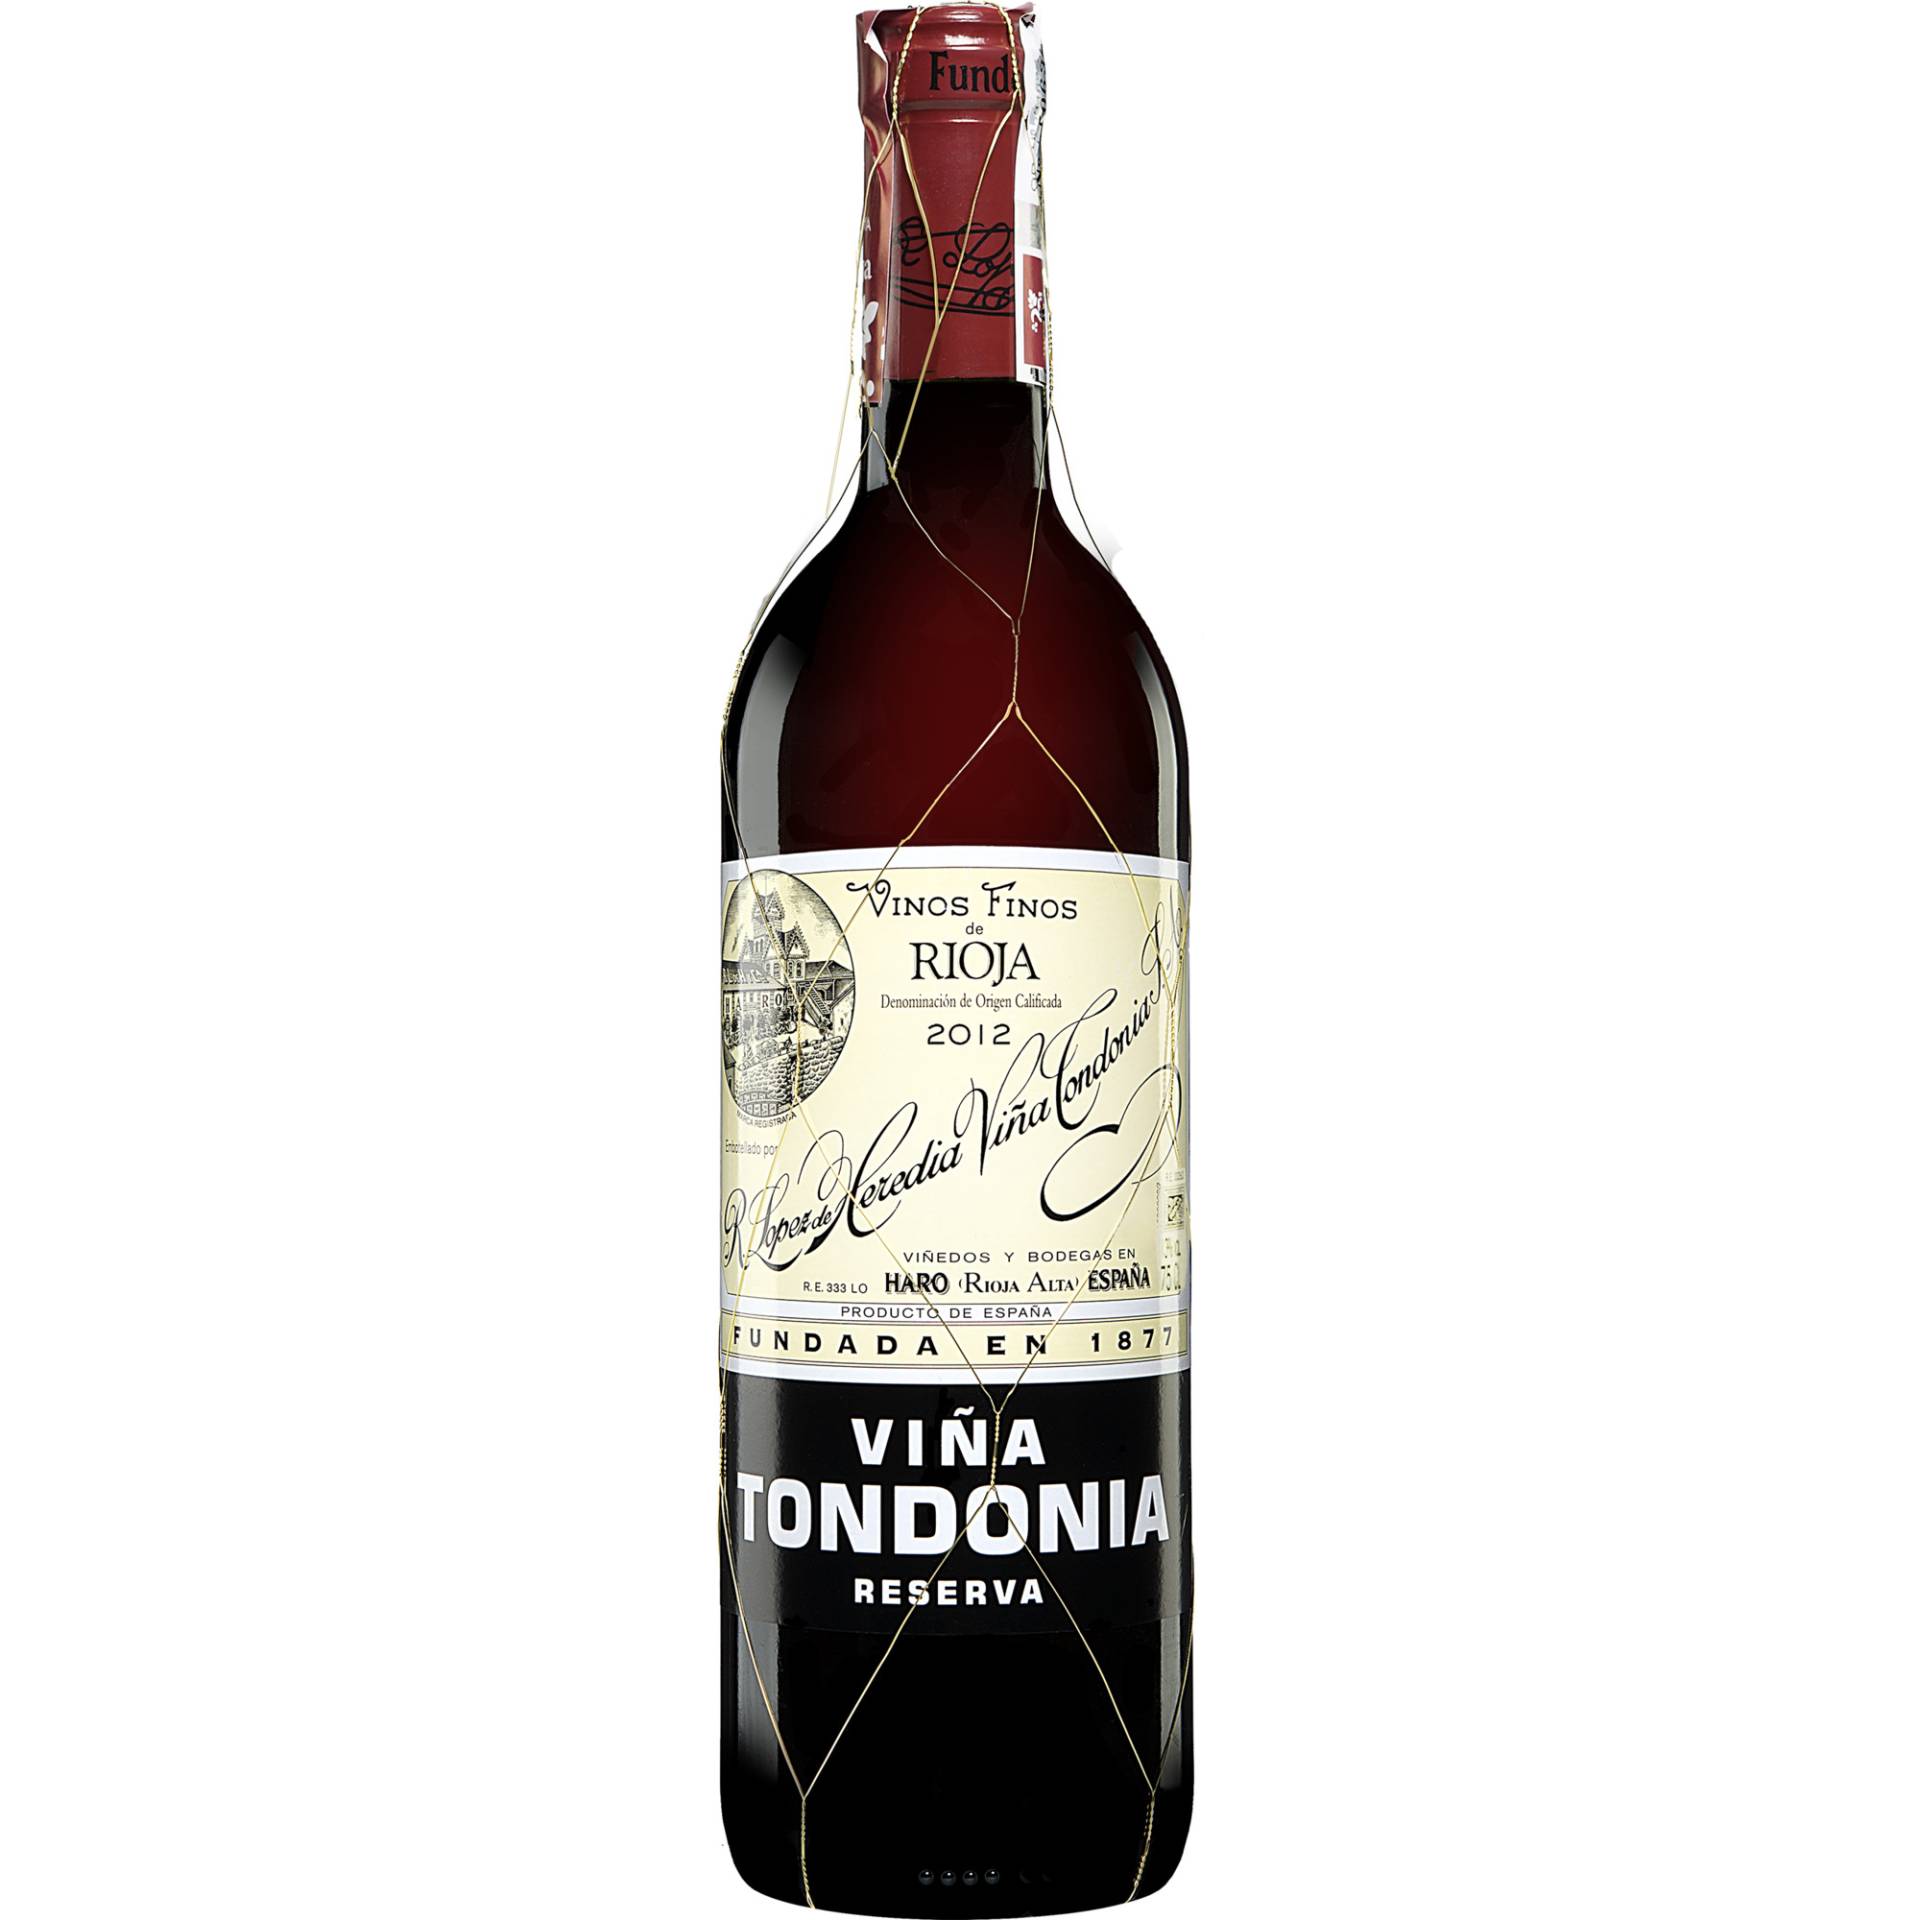 Tondonia »Viña Tondonia« Tinto Reserva 2012  0.75L 13% Vol. Rotwein Trocken aus Spanien von López de Heredia - Viña Tondonia